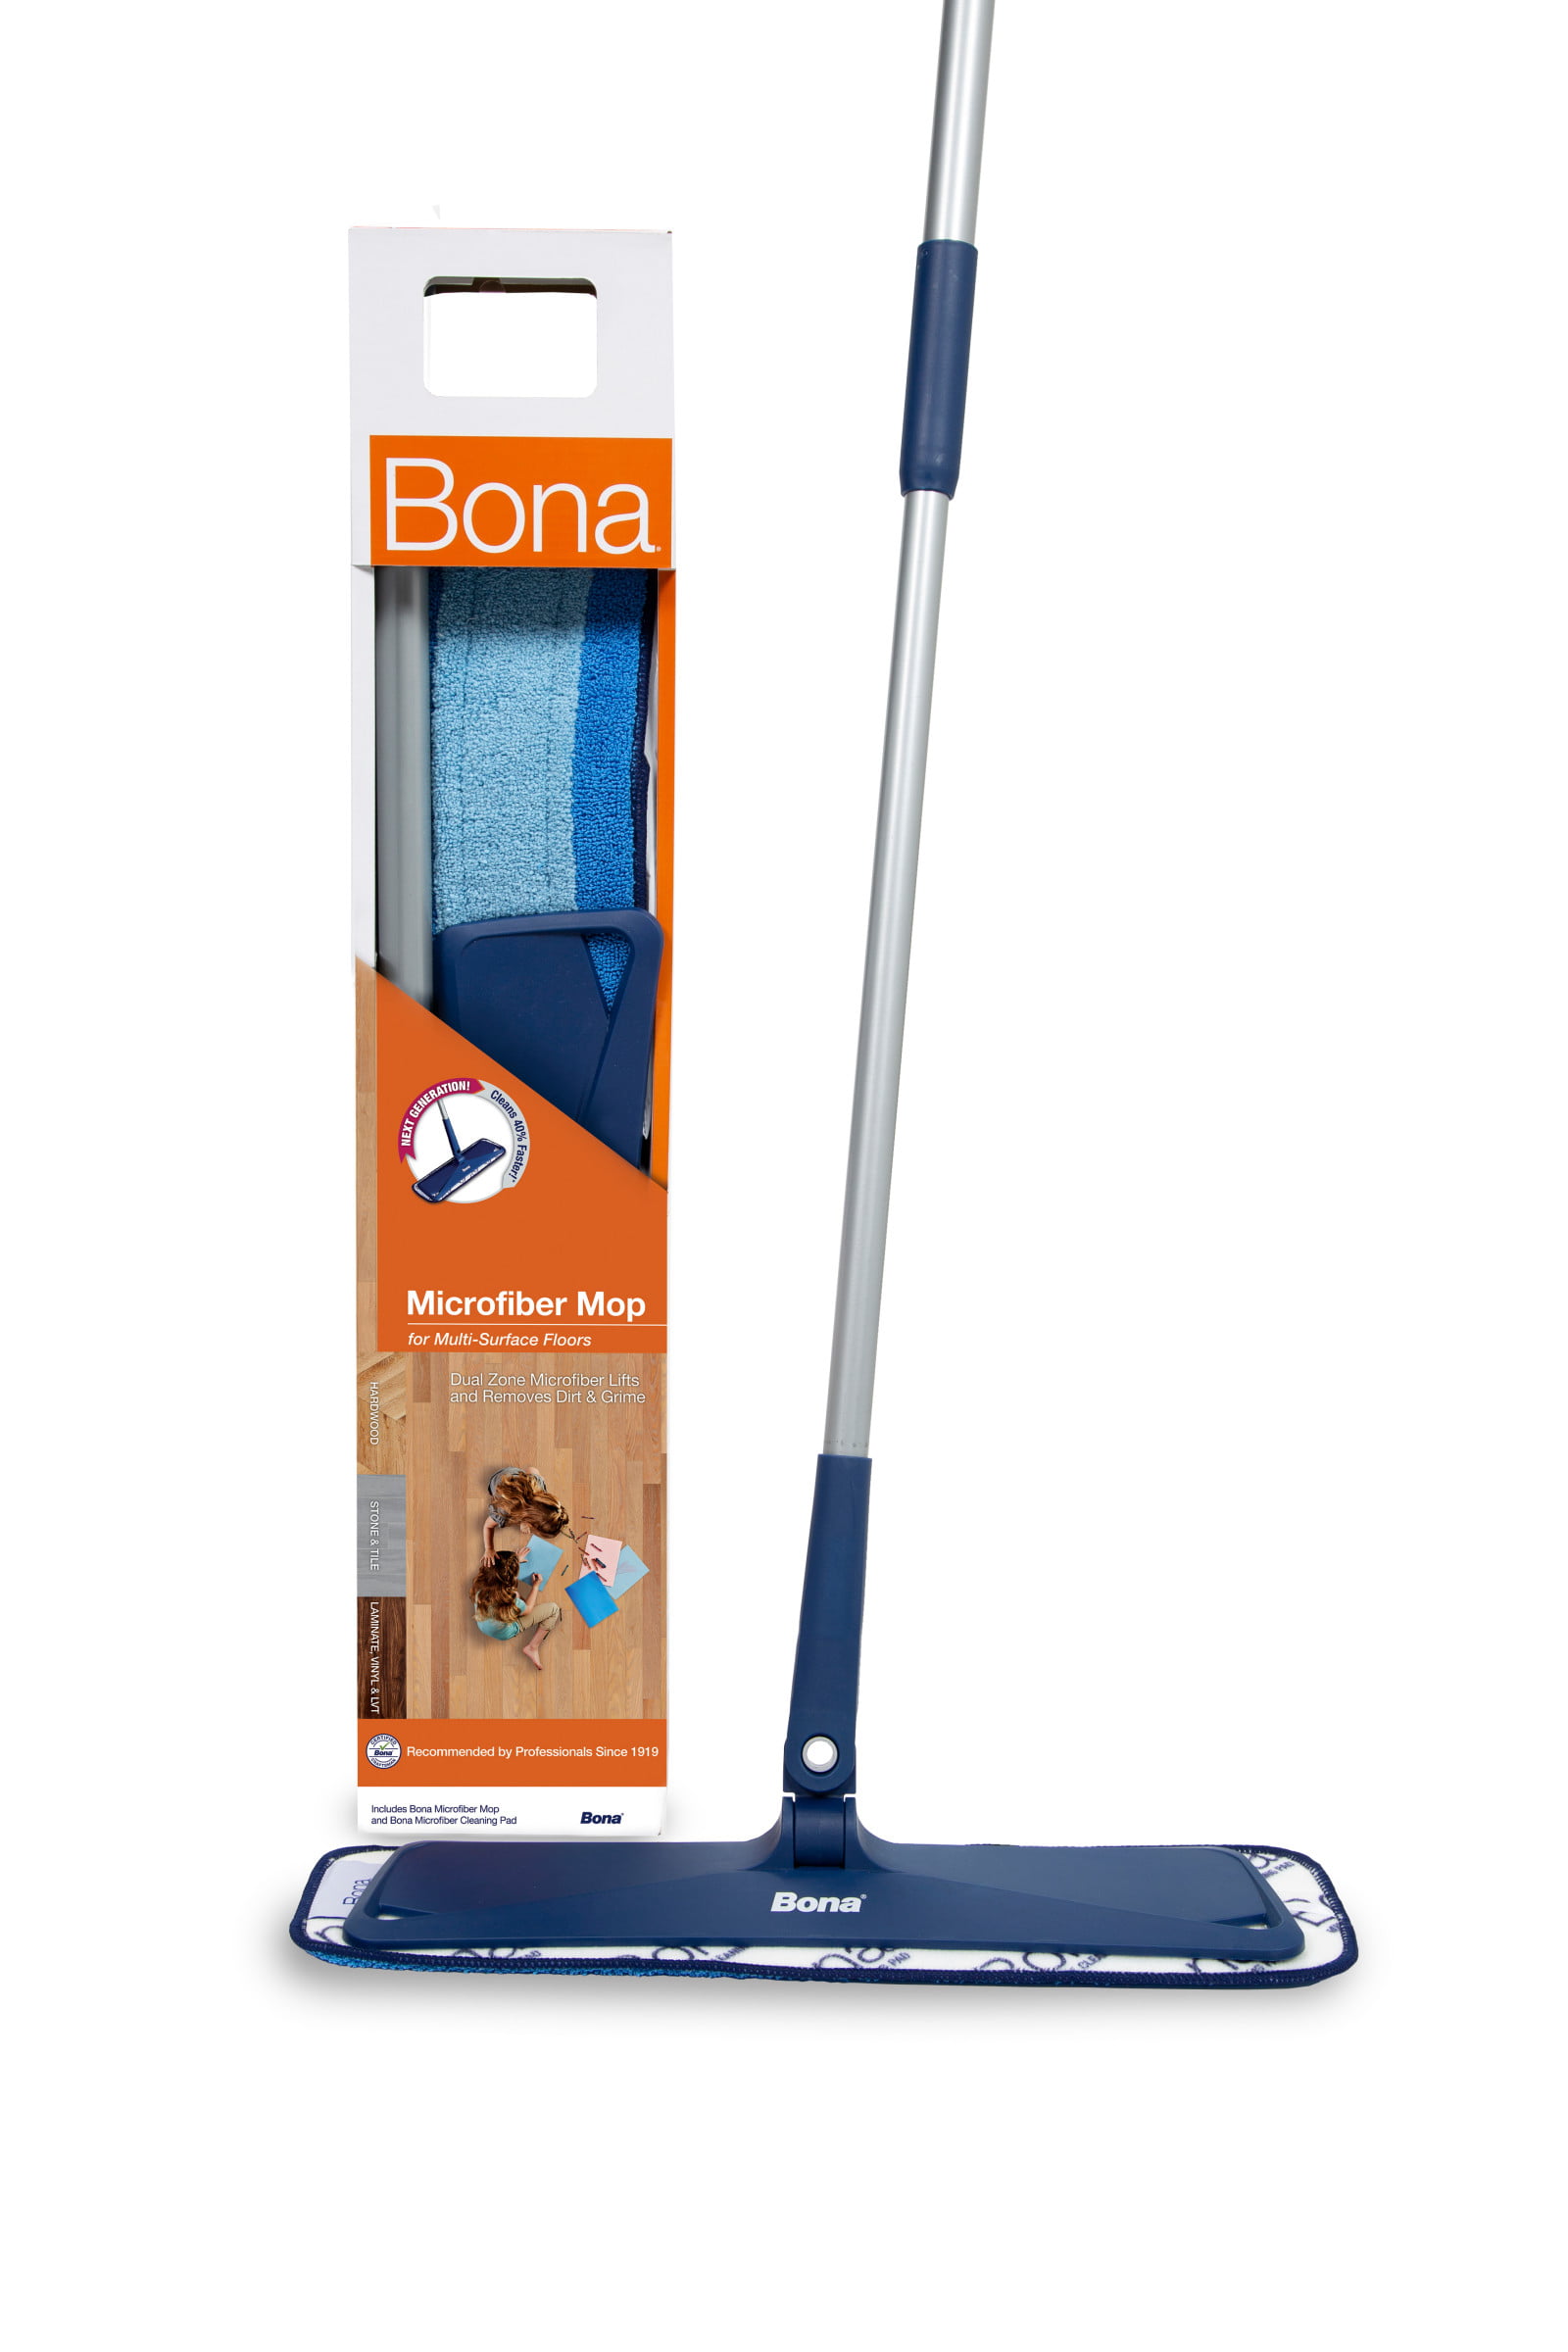 Bona Microfiber Mop For Multi Surface, Hardwood Floor N More Mop